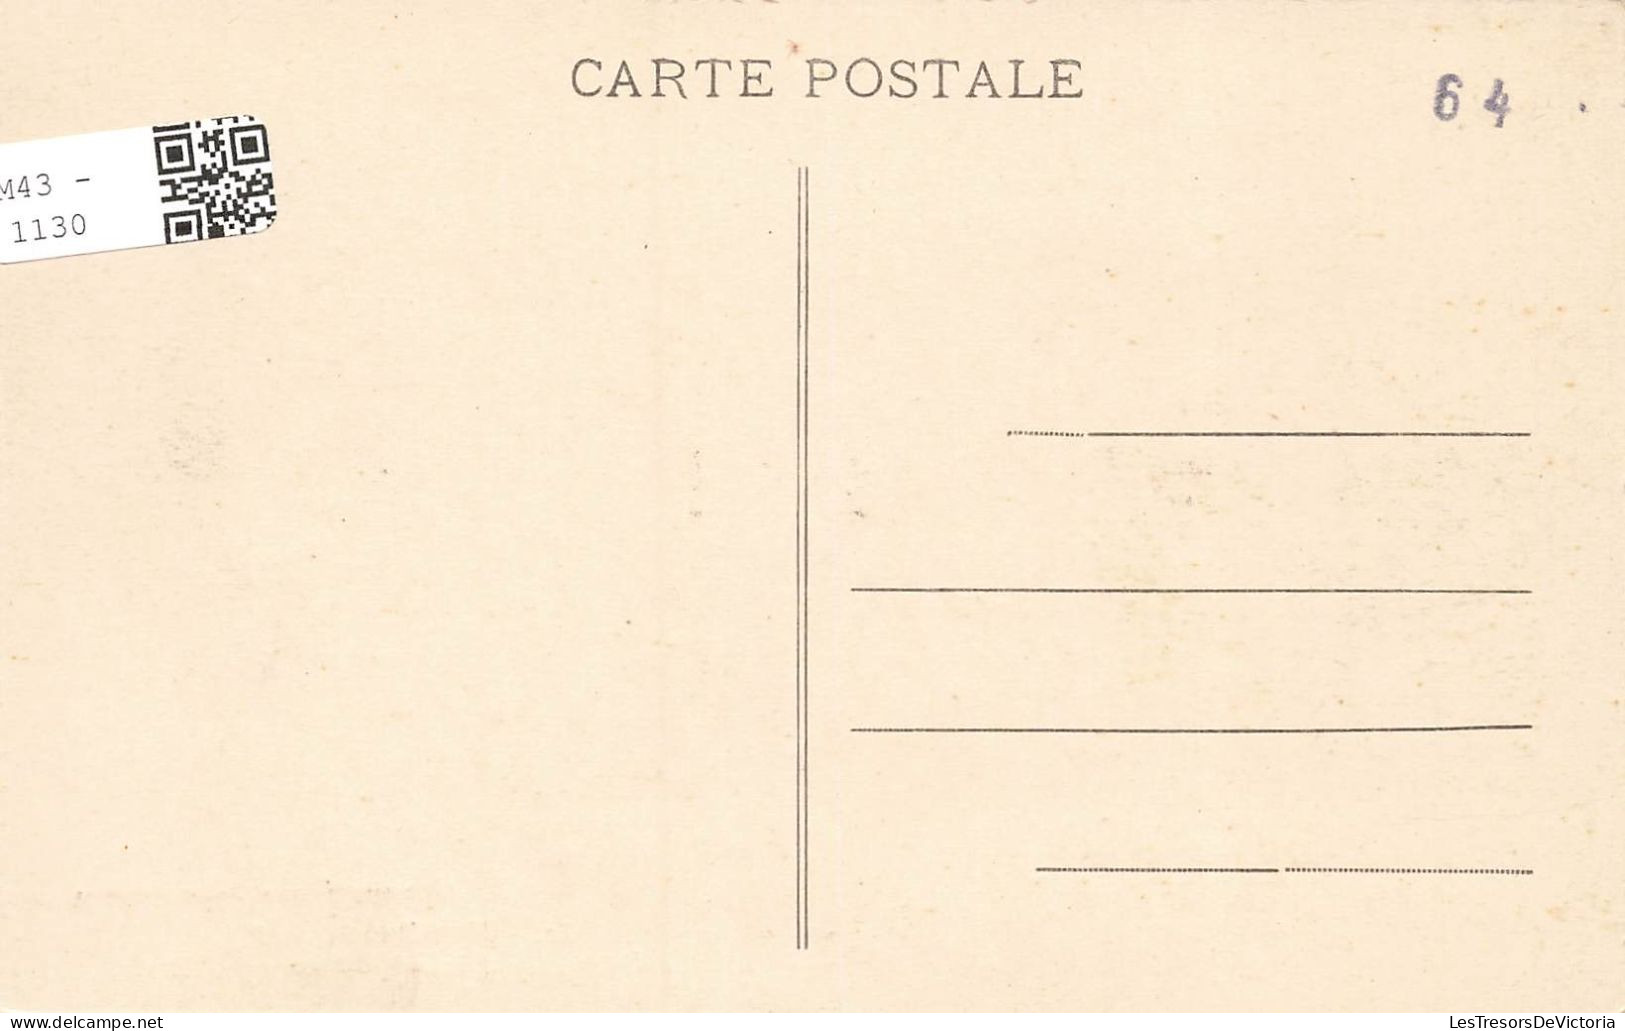 FRANCE - Hendaye - La Plage Et Le Jaizquibel - Carte Postale Ancienne - Hendaye